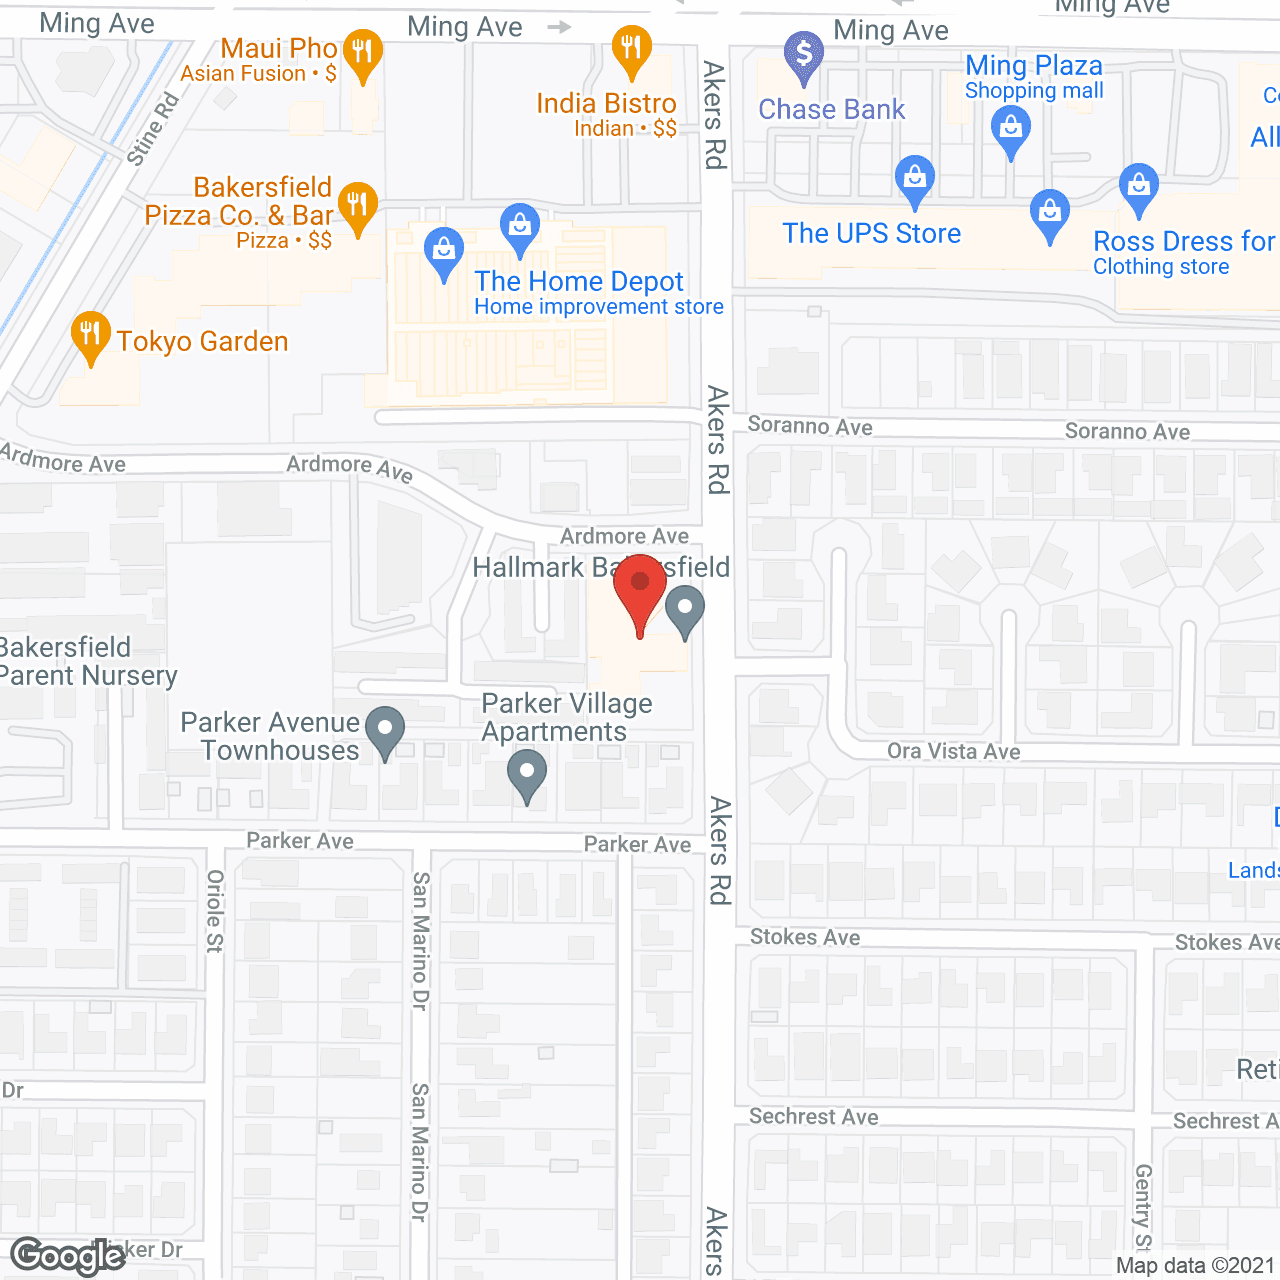 Hallmark Bakersfield in google map